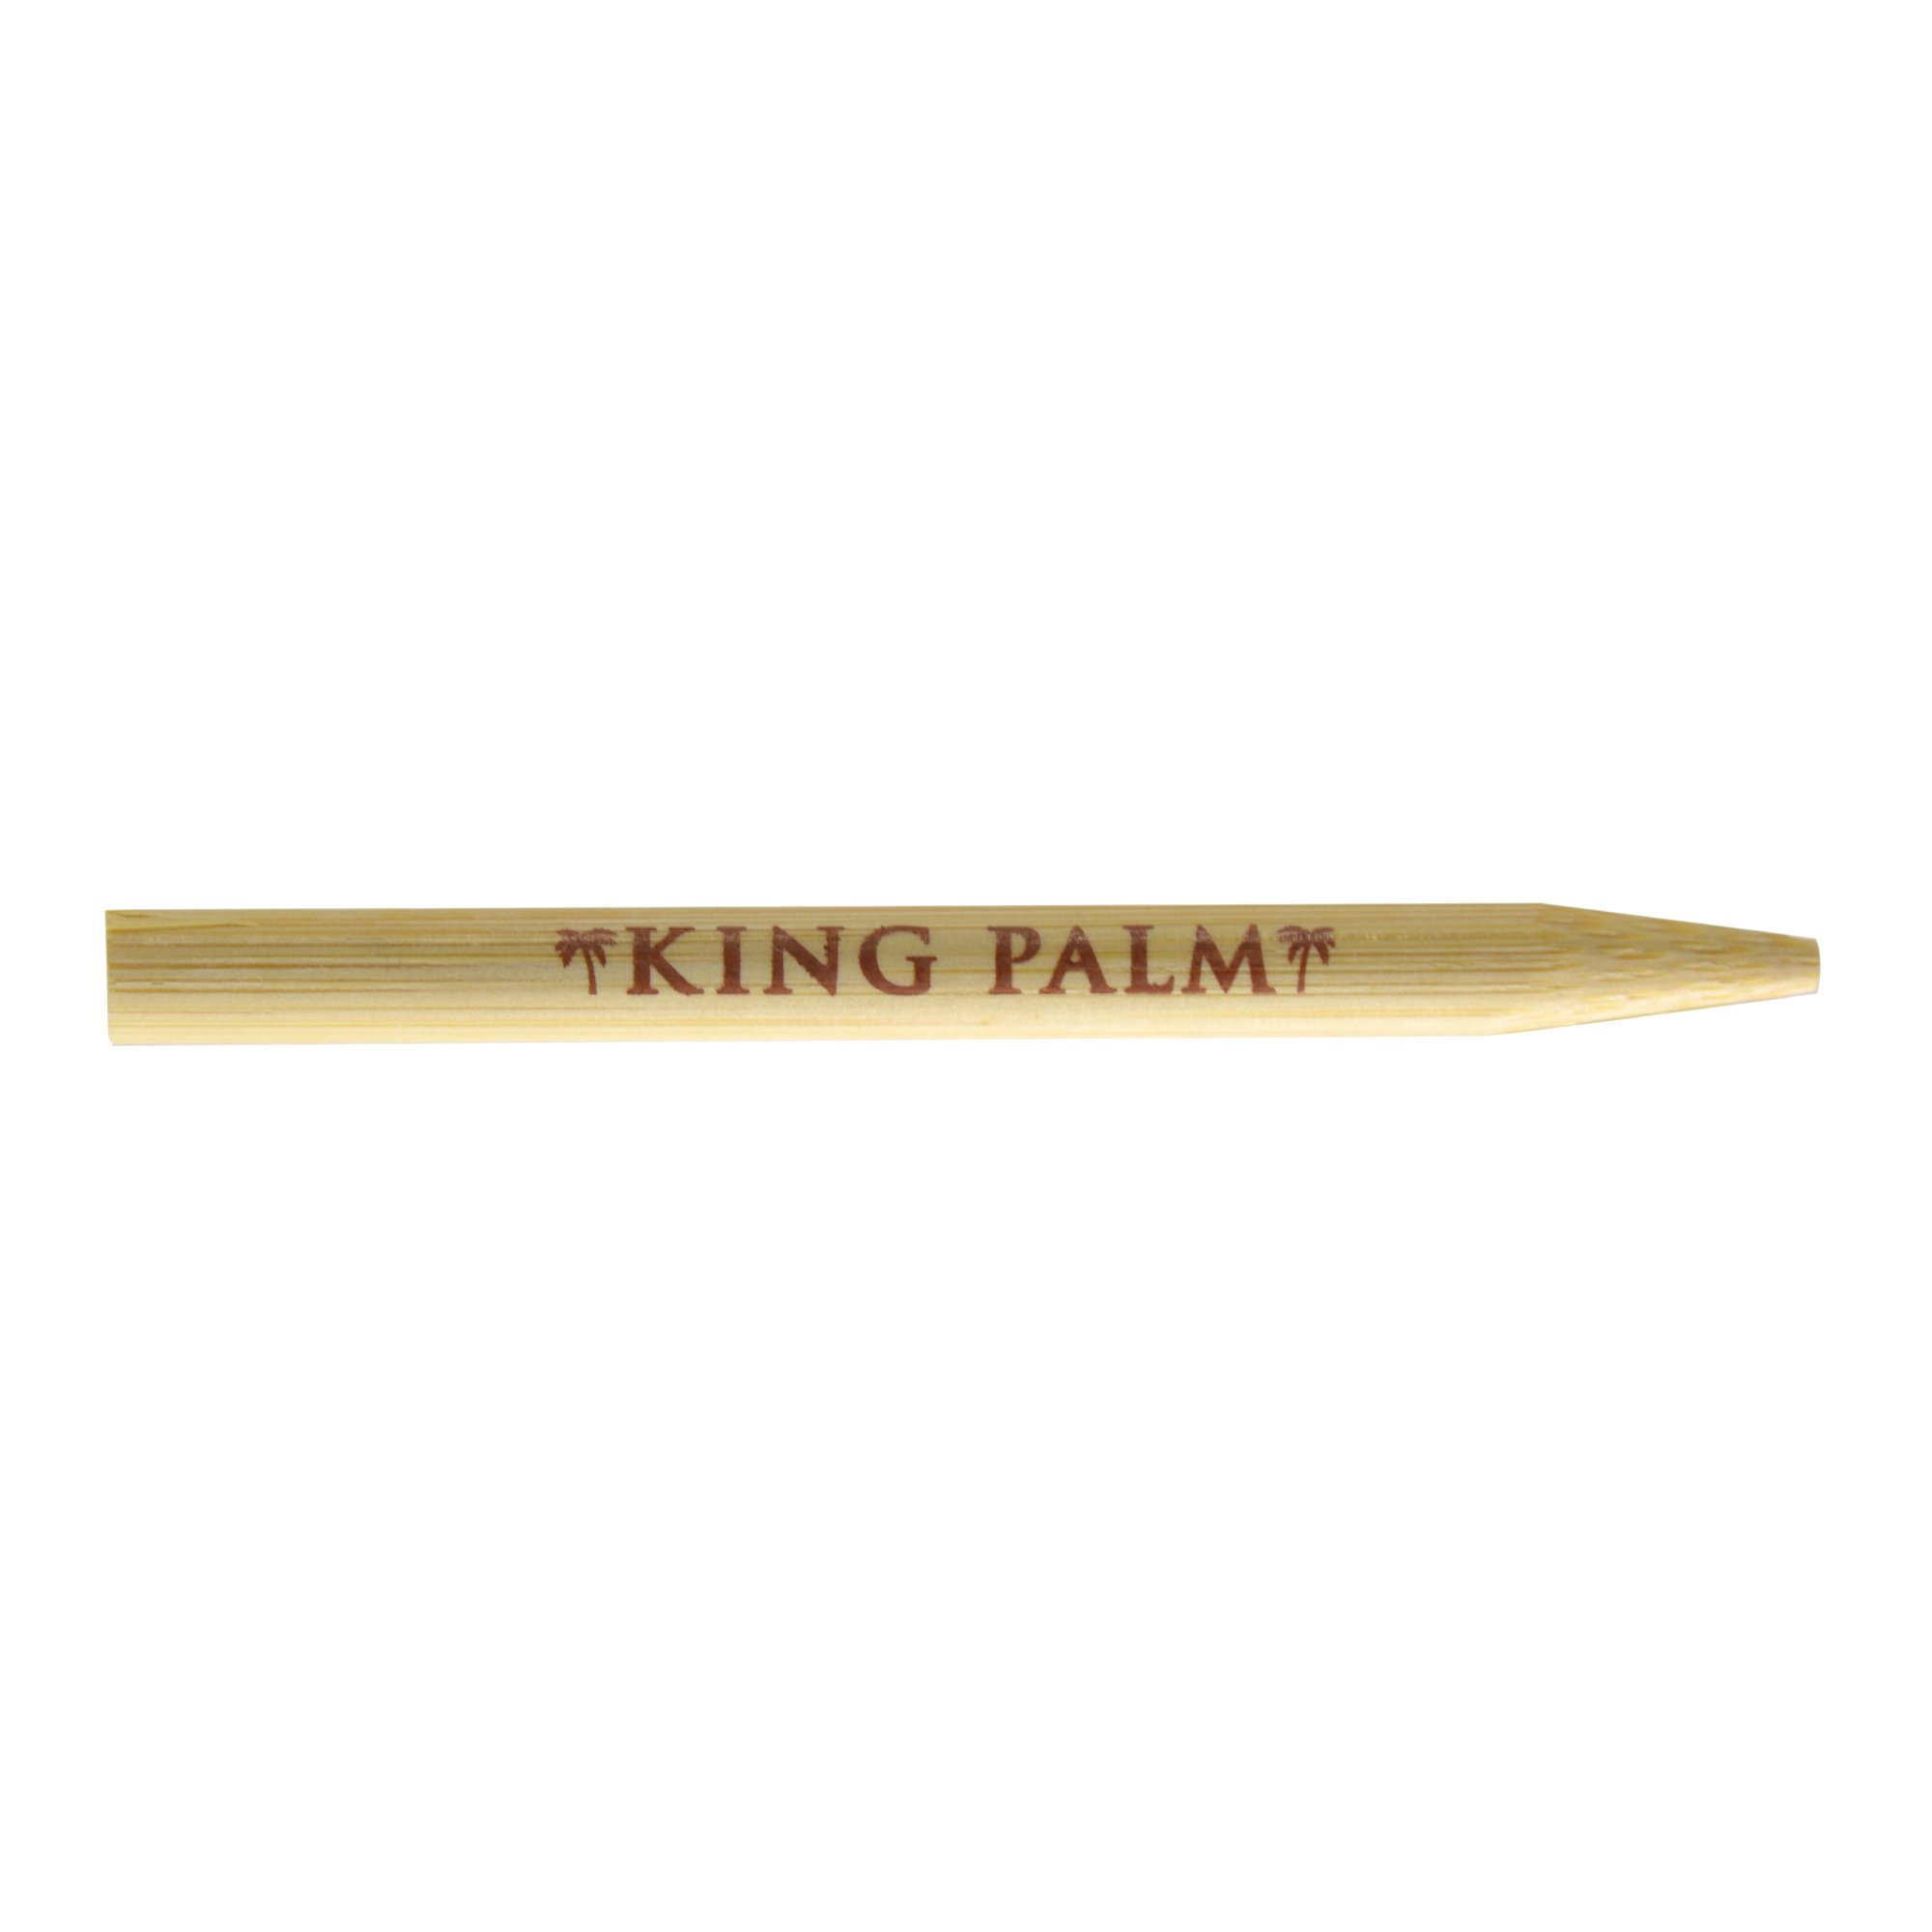 KING PALM | 'Retail Display' Slim Rolled Blunt Wrap Packs | 104mm - Natural Leaf - 8 Count - 6